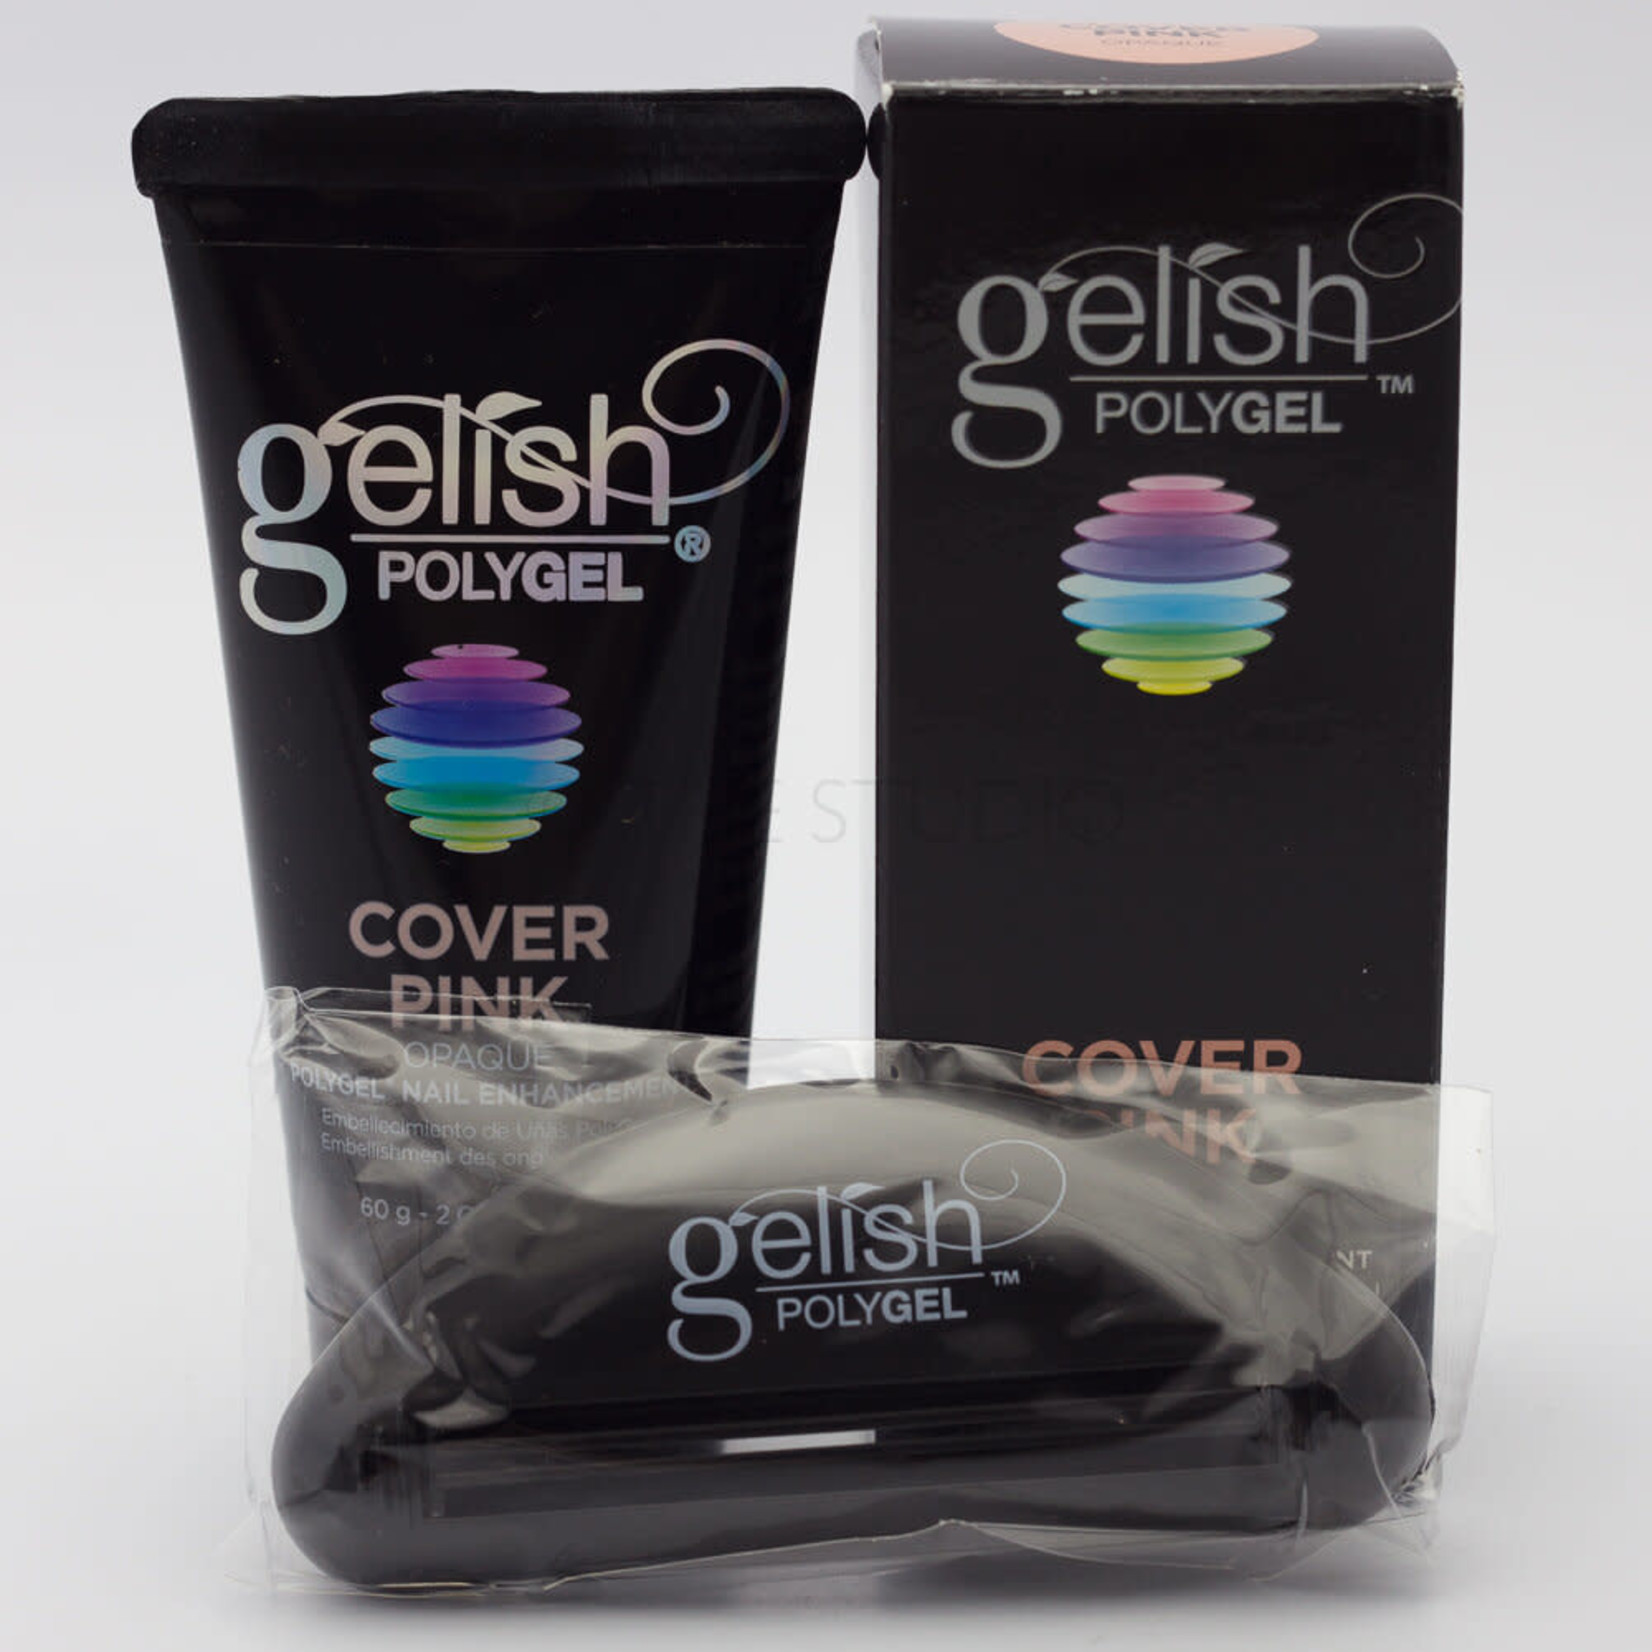 Gelish Gelish - Polygel - Cover Pink